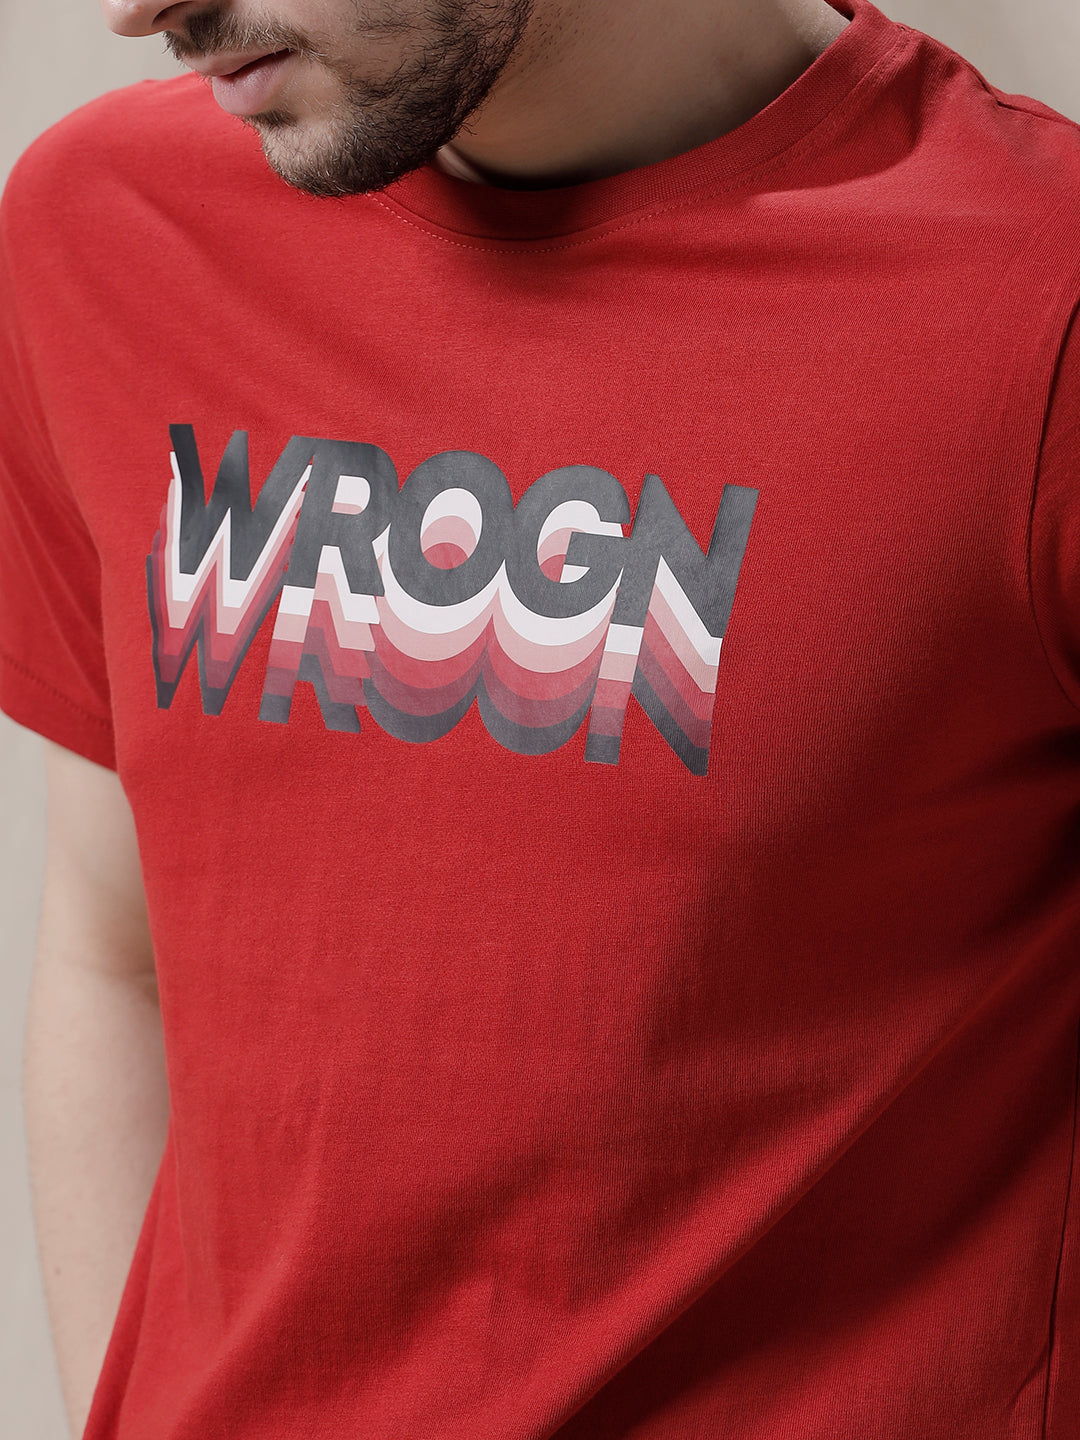 All So Wrogn Printed T-Shirt